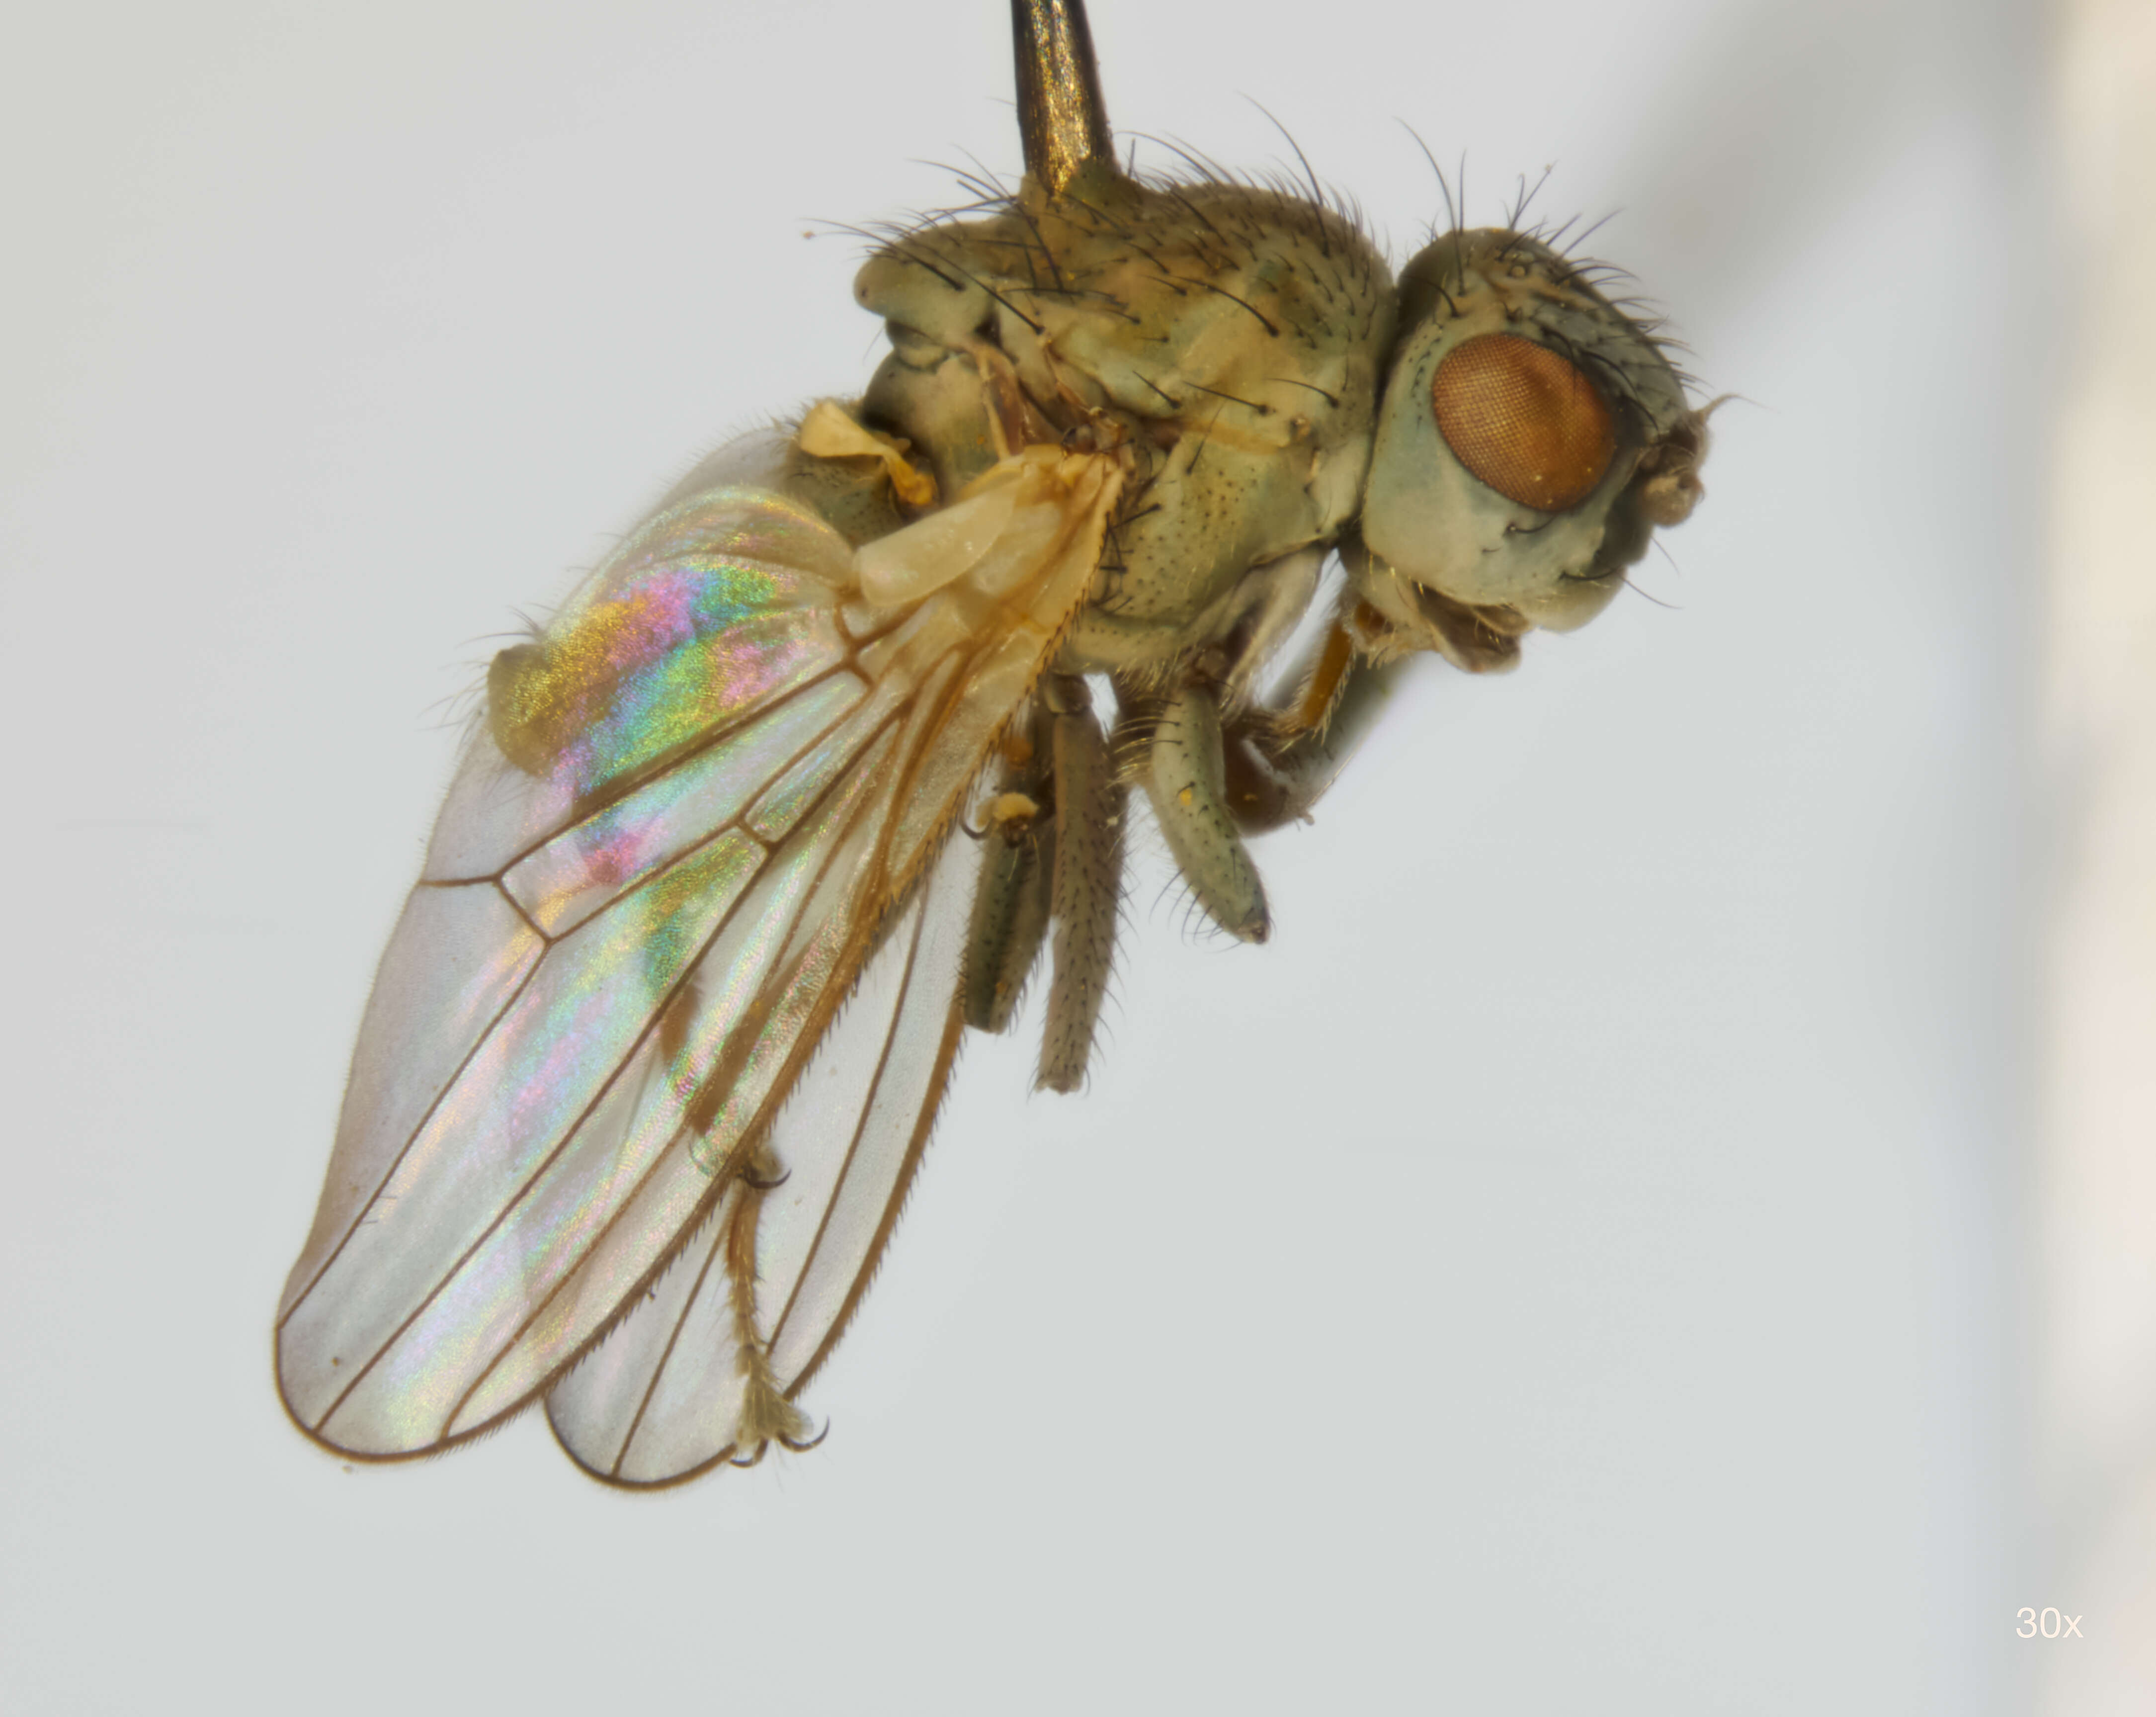 Image of Canacidae